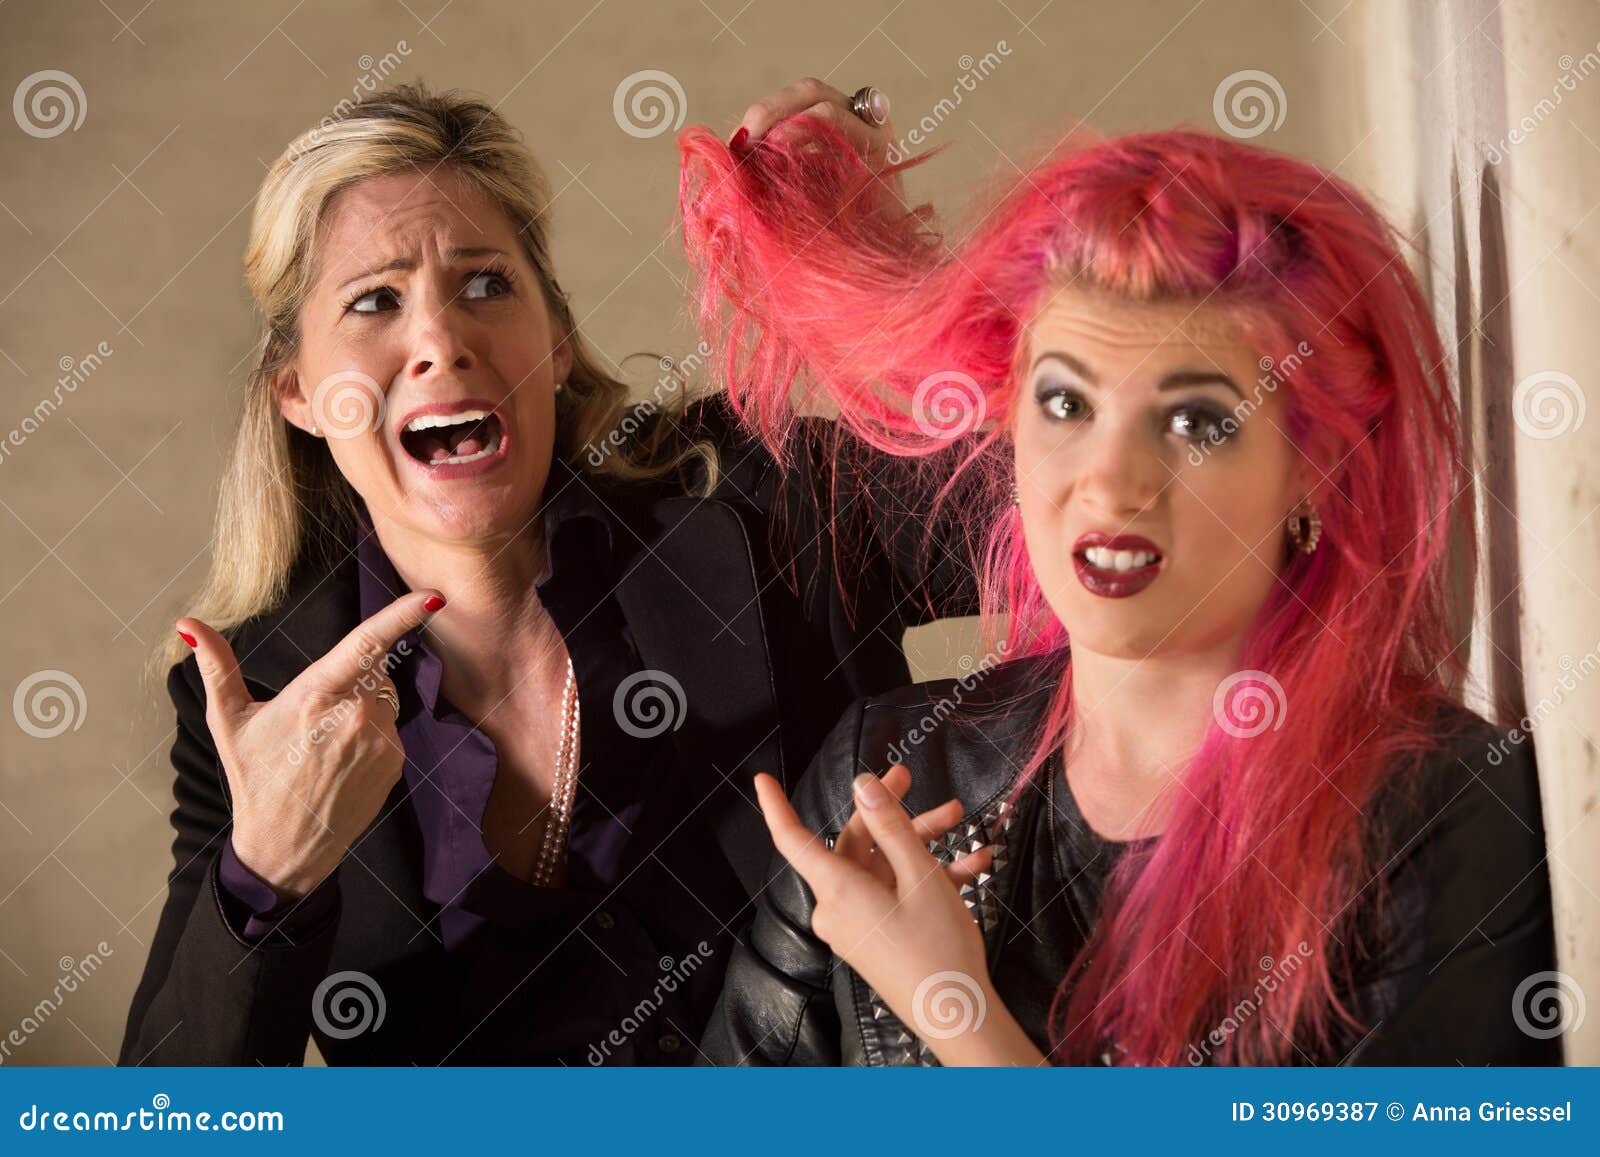 lady shocked about hairdo